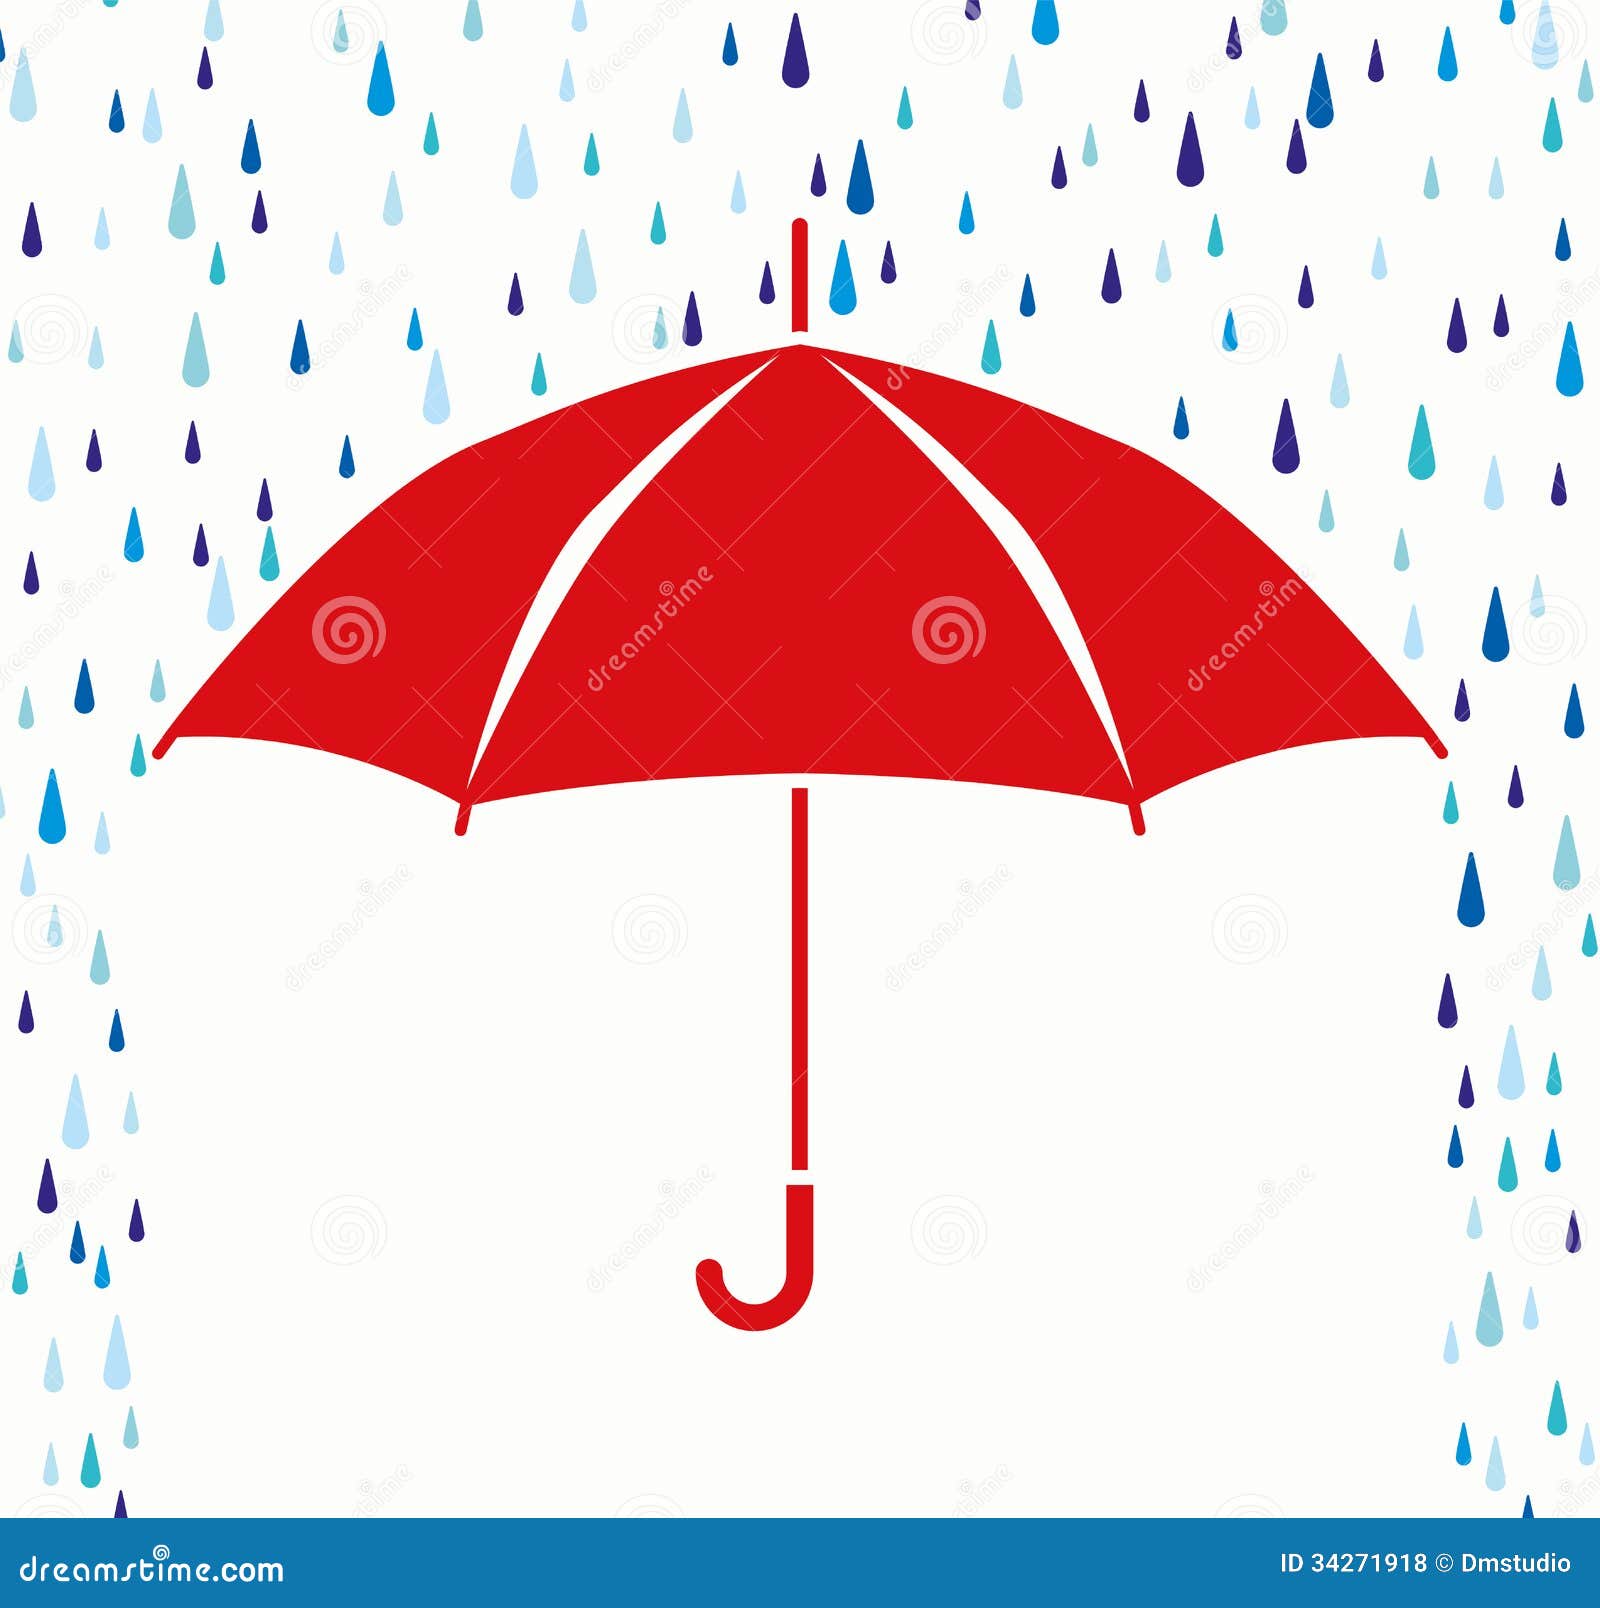 clipart of umbrellas and rain - photo #11